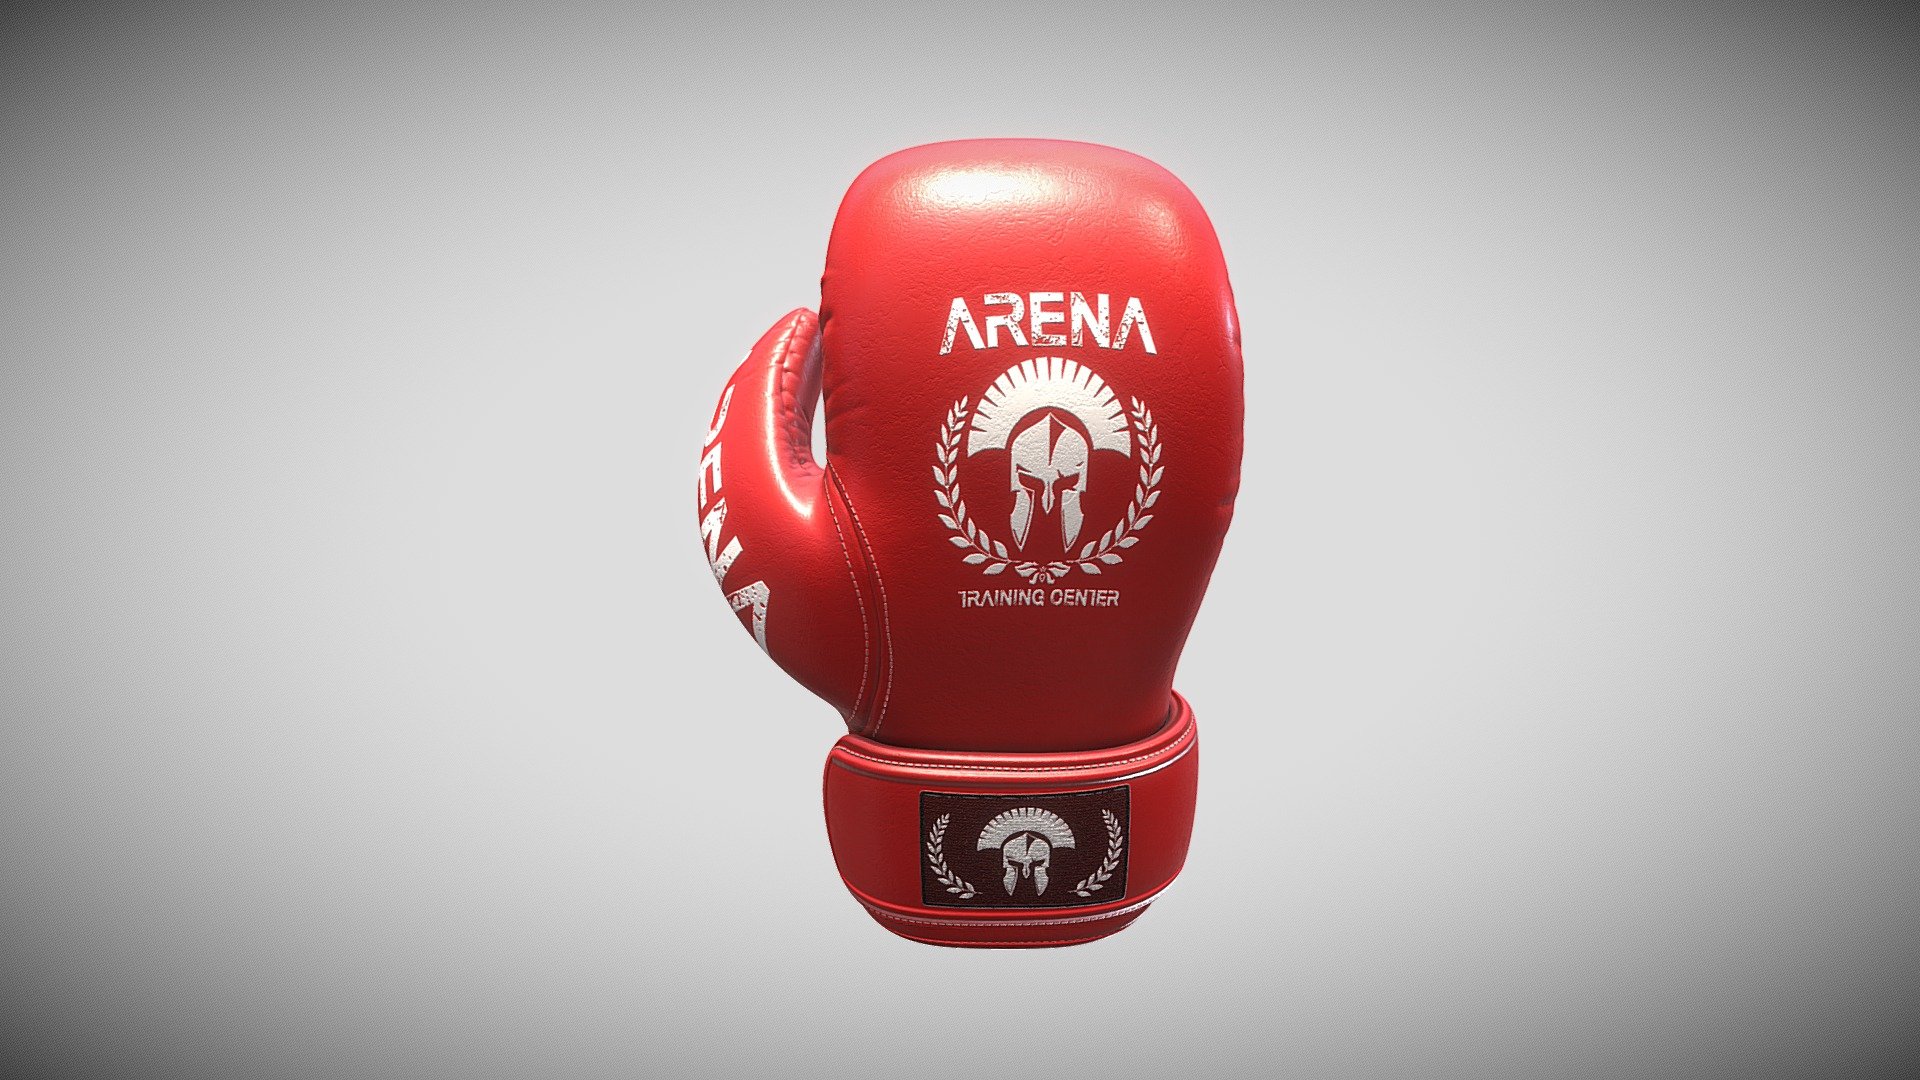 Something I made for a logo animation - Kickboxing Glove - 3D model by 3Daoist (@jason044) 3d model